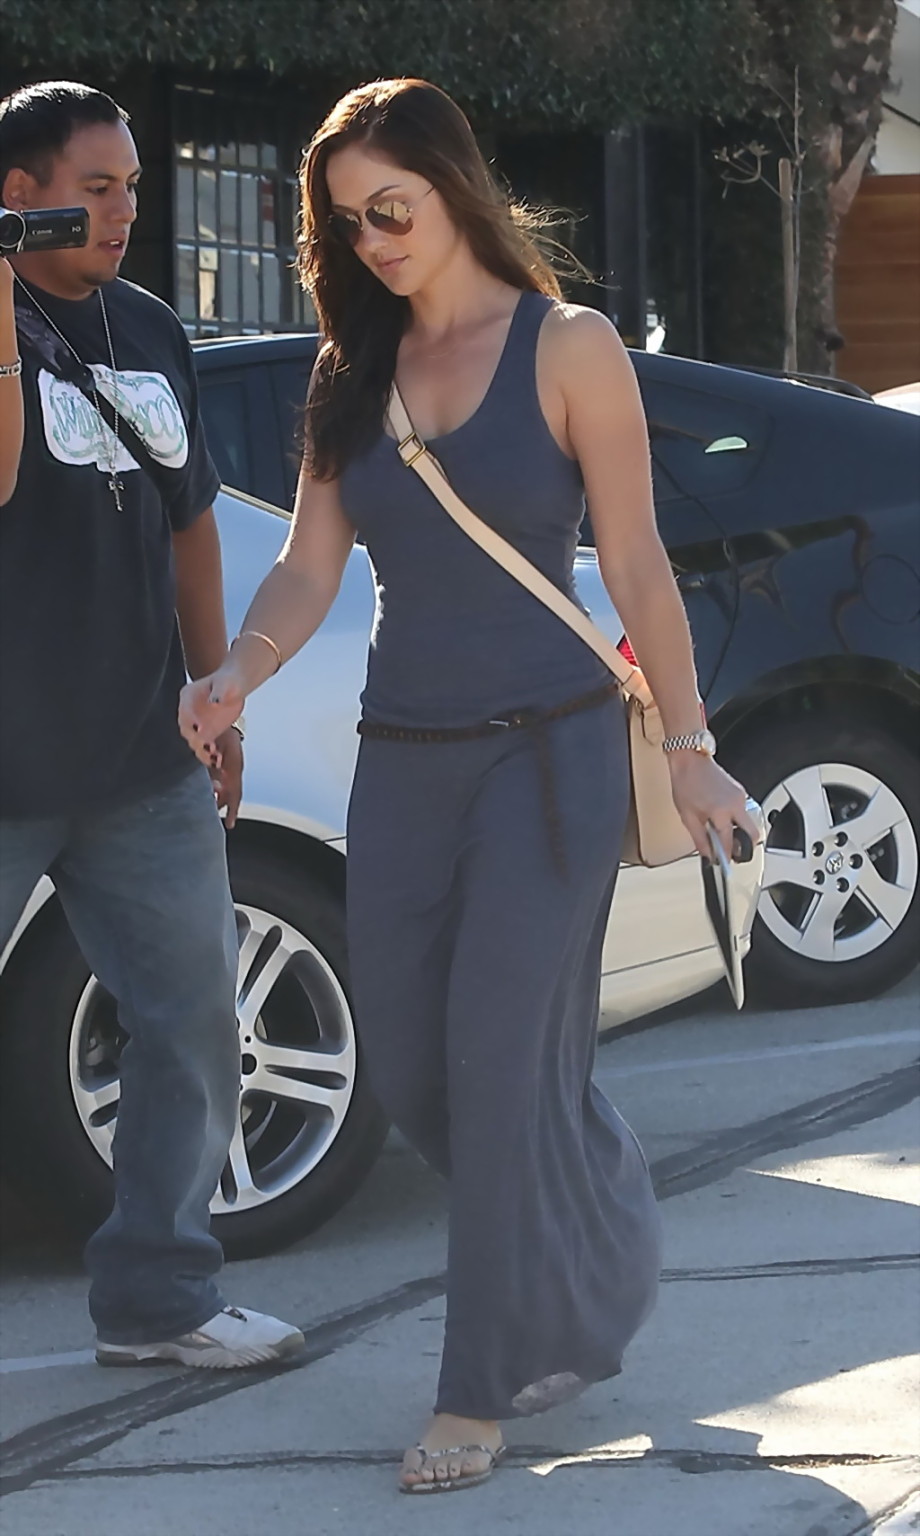 Minka Kelly braless shows hard pokies in tight gray dress while leaving a salon  #75249878